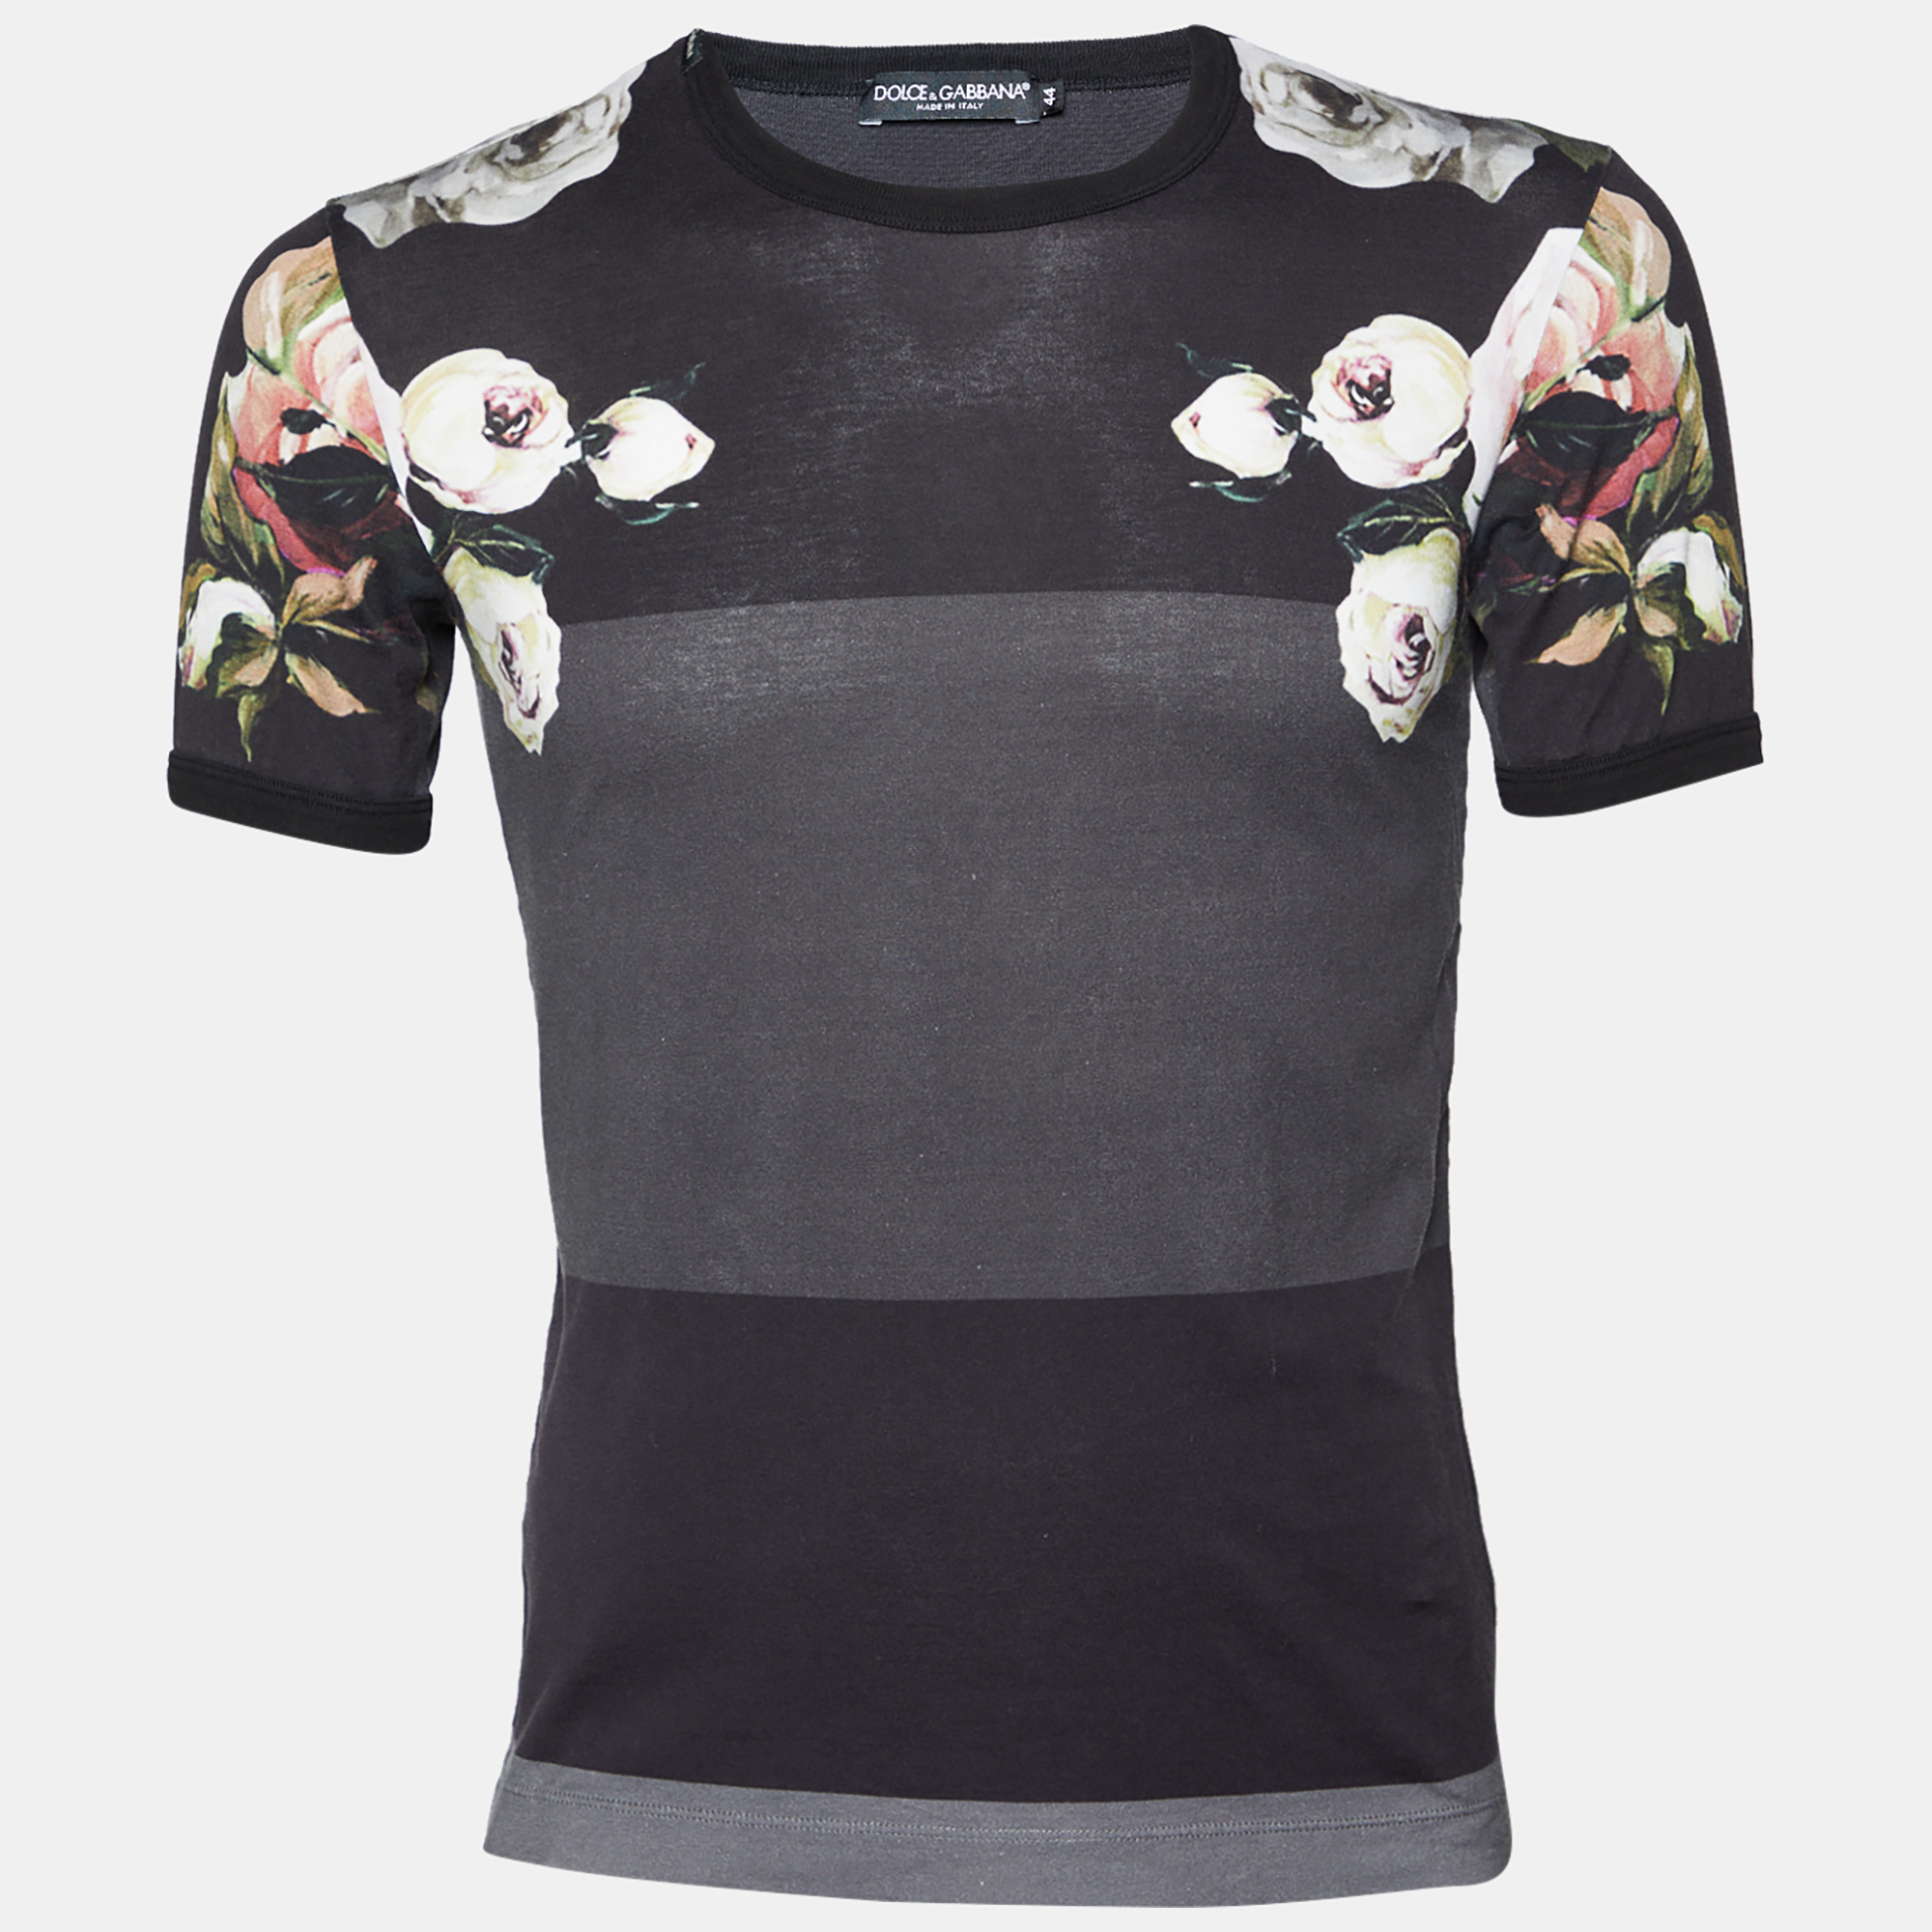 Dolce & Gabbana  Grey & Black Striped Floral Printed Cotton Round Neck T-Shirt XS